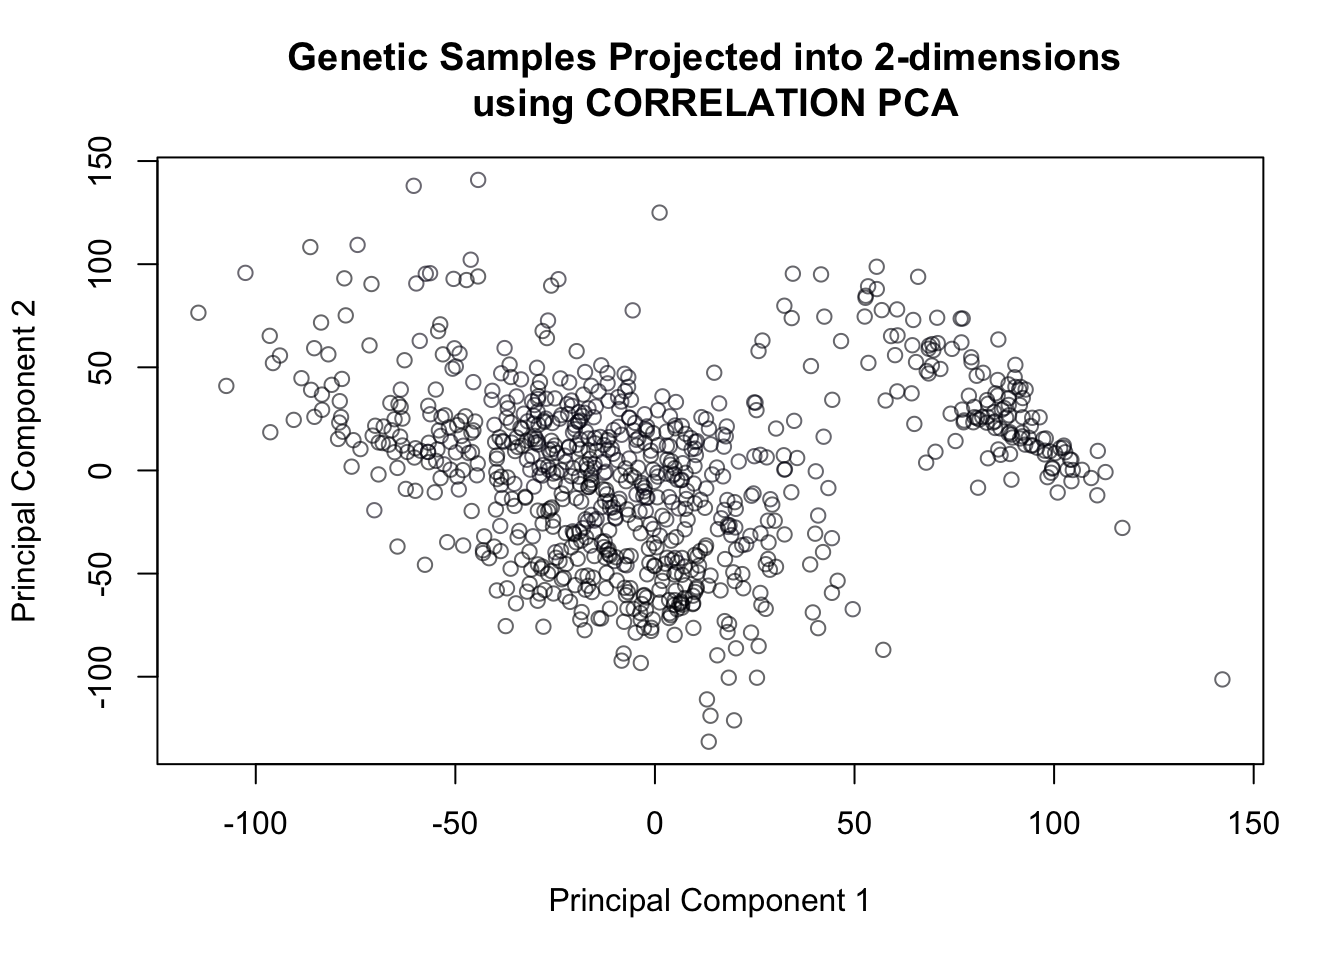 Correlation PCA of genetic data